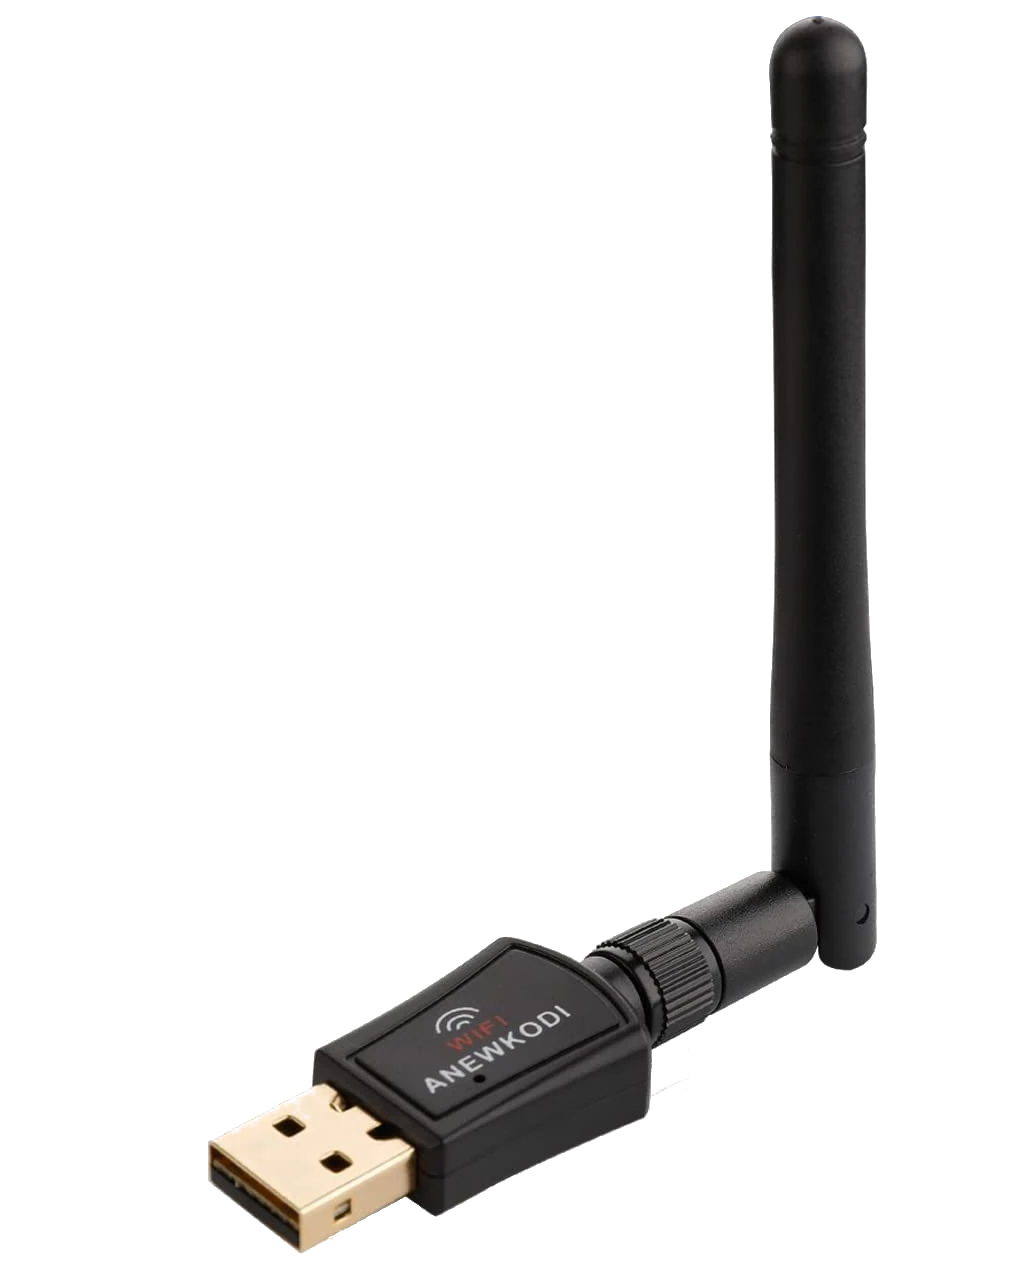 ANEWKODI USB WiFi Adaptateur 600Mbps Driver Free-Auto Install Clé WiFi Dongle sans Fil AC Dual Band 2,4GHz/5GHz Clef WiFi avec 5dBi Antenne Détachable pour Windows 10/8/8.1/7/Vista/XP Mac 10.6-10.13